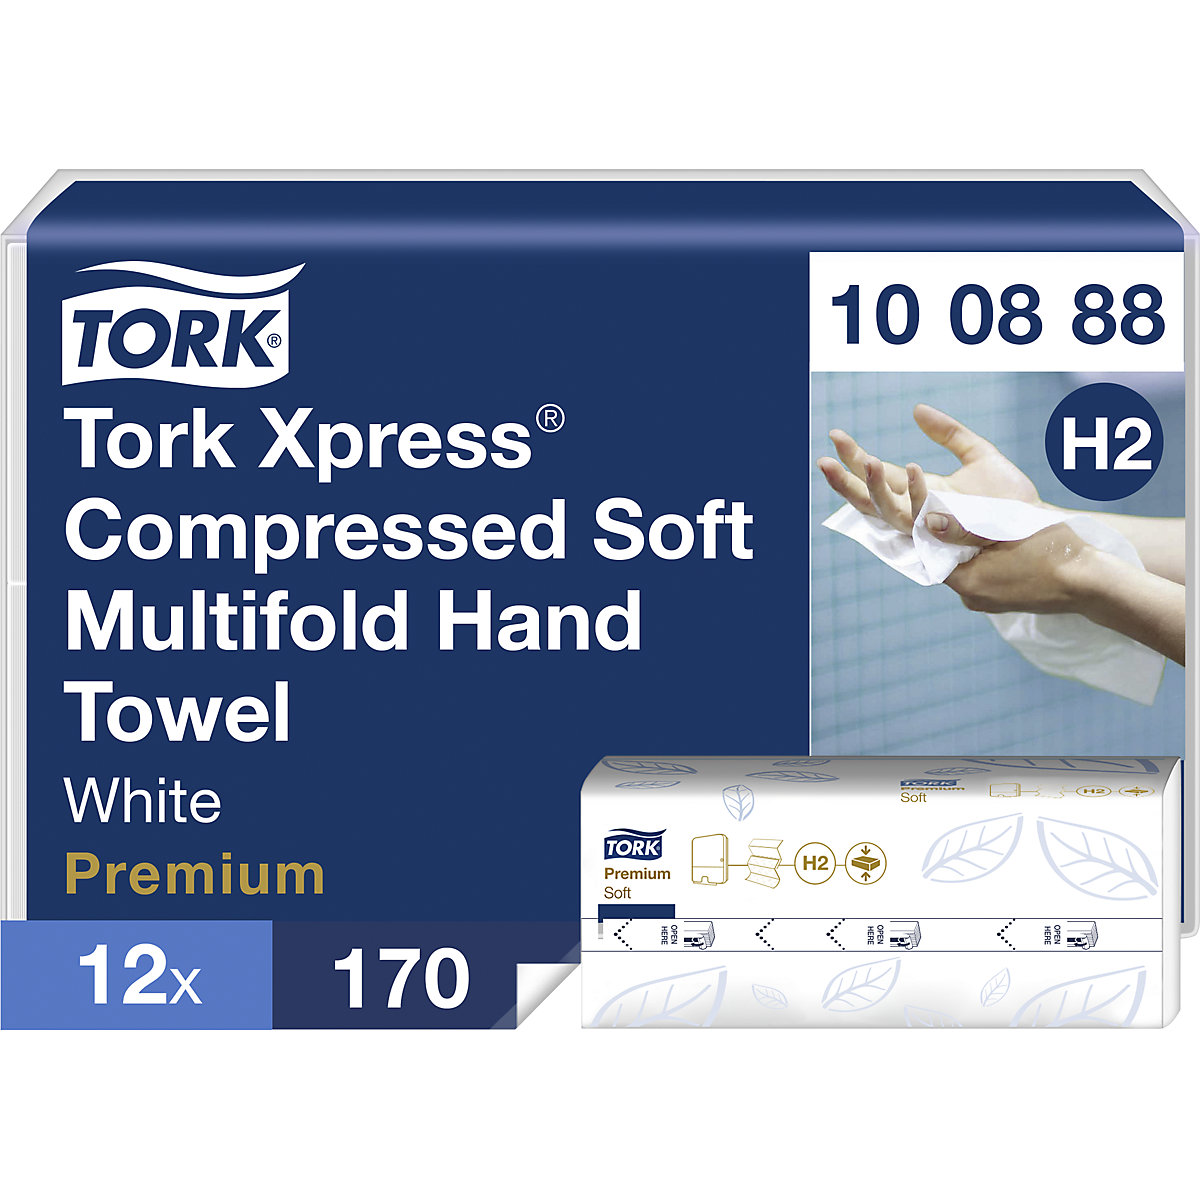 Xpress compressed multifold paper towels - TORK